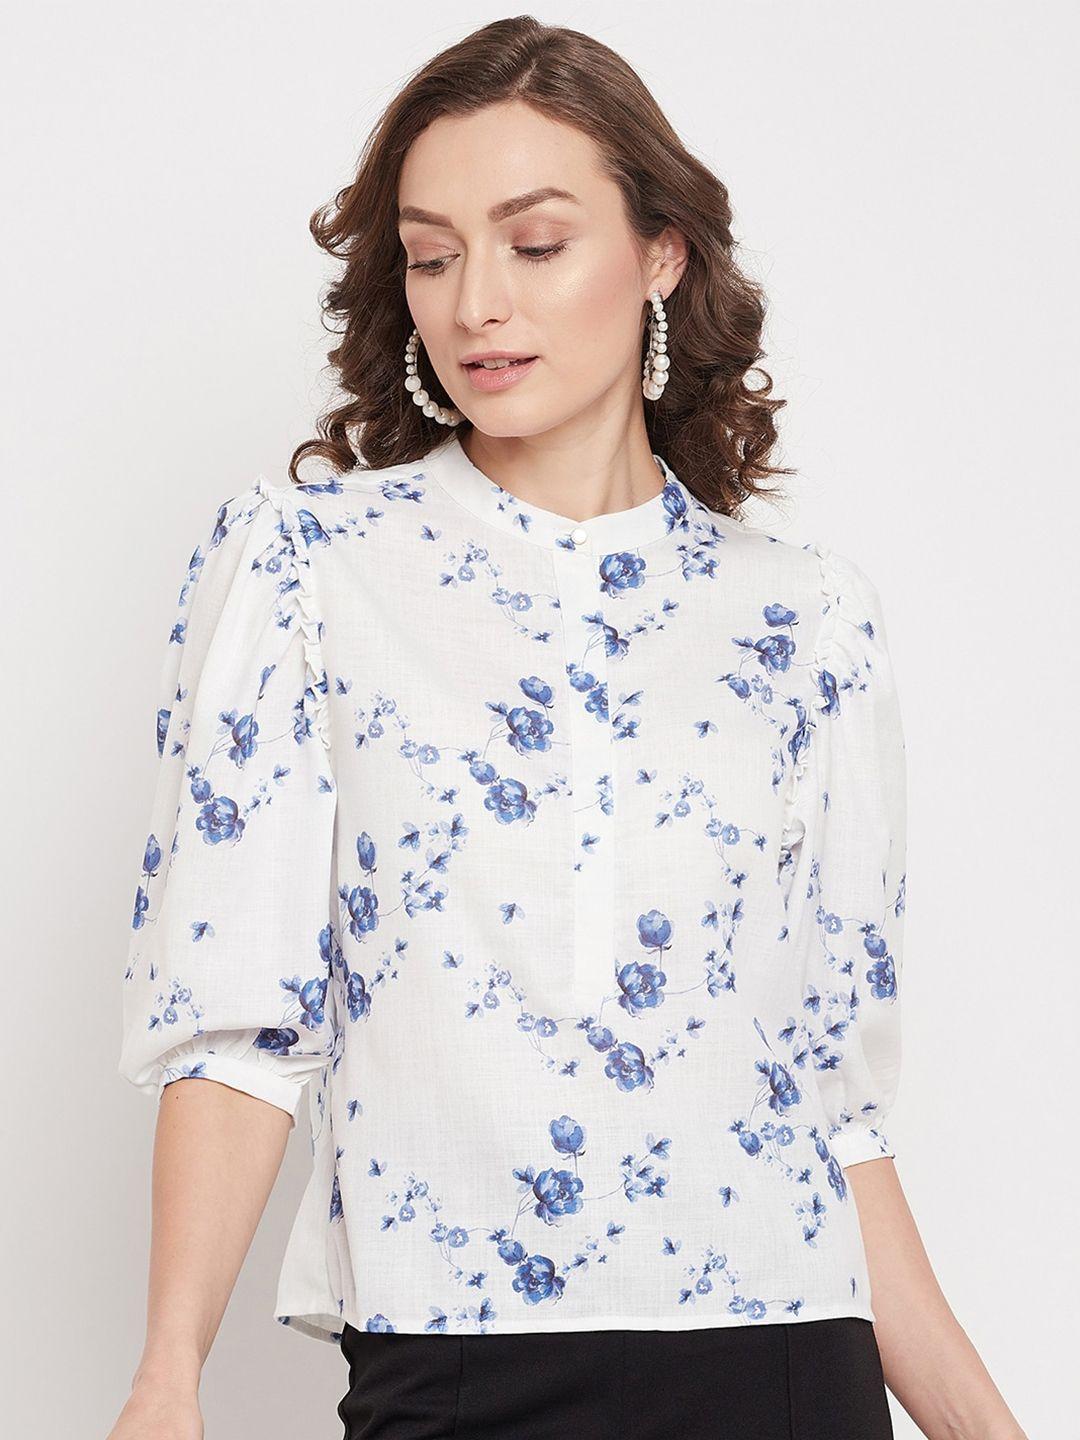 madame blue & white floral printed mandarin collar linen shirt style top